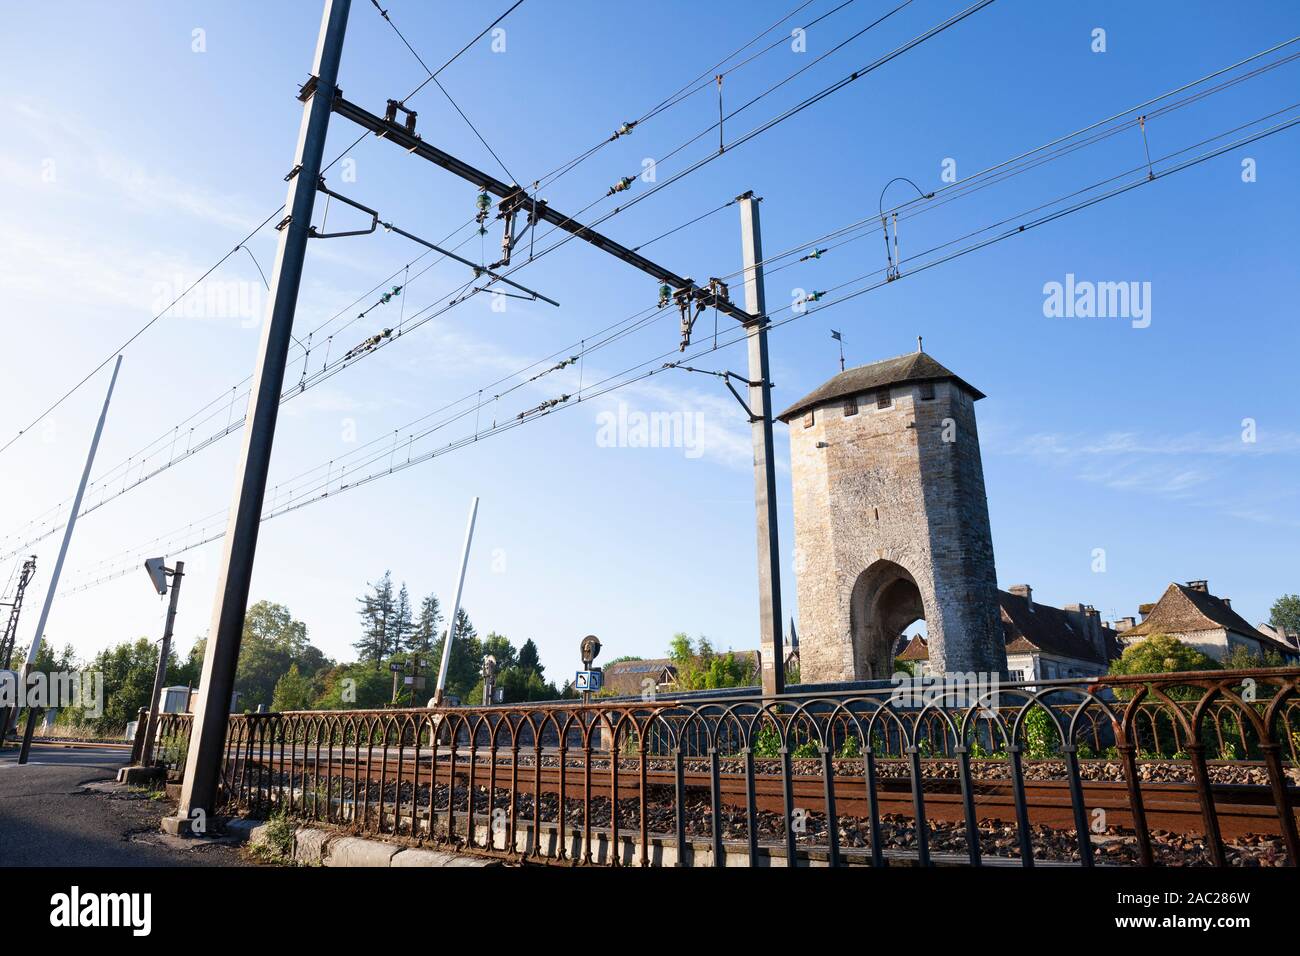 Europe, France, Nouvelle-Aquitaine, Orthez, 14th Century Stone Bridge across the Gave de Pau with Electrified Railway Line Stock Photo